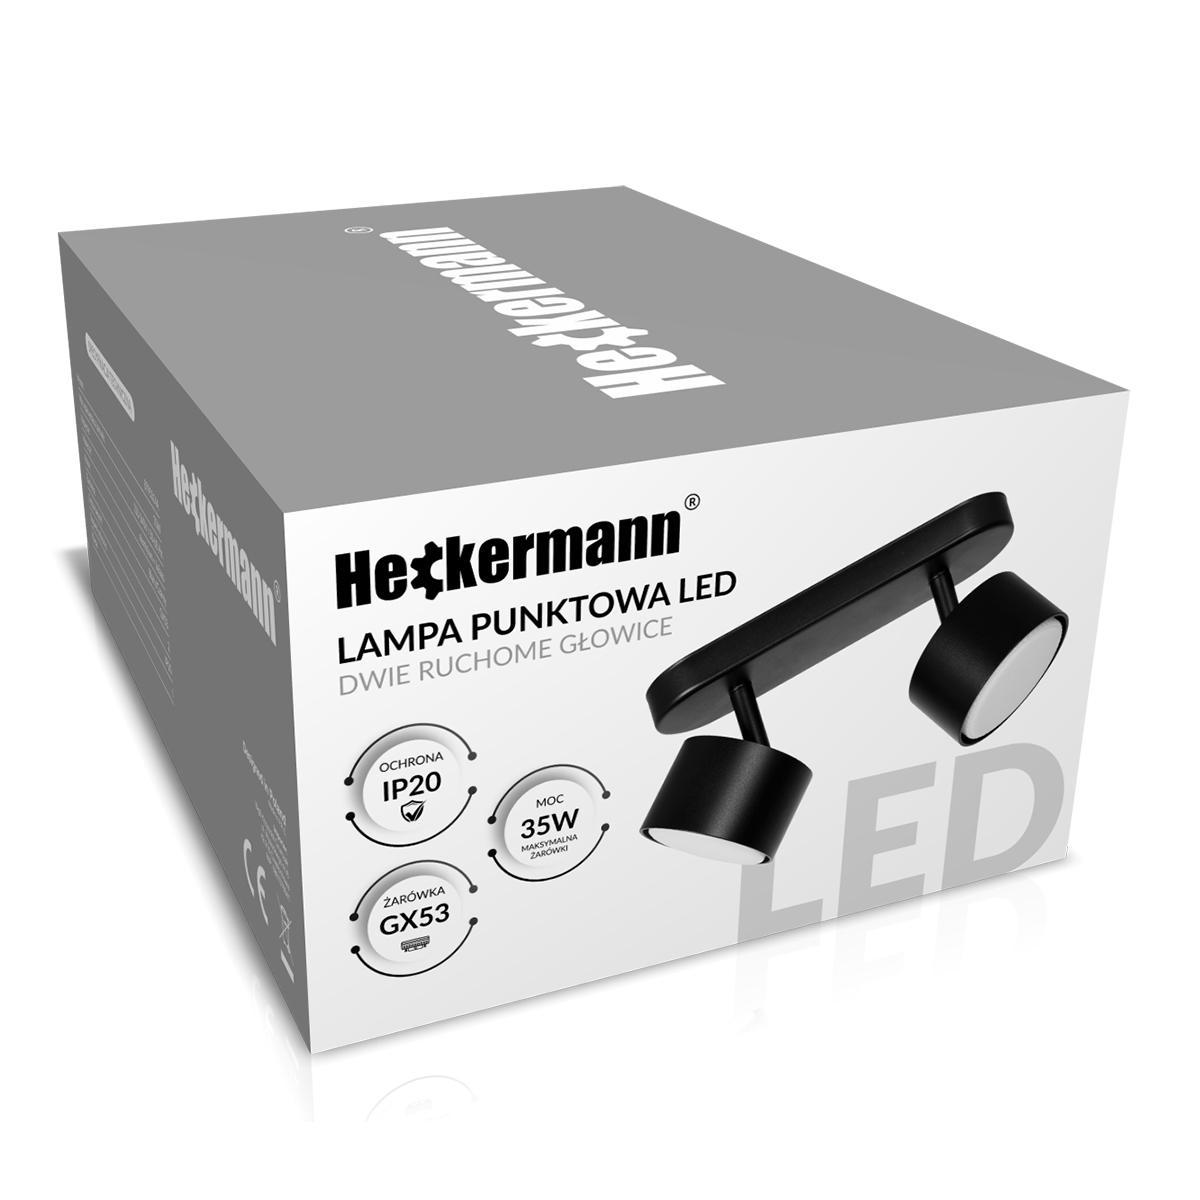 Lampa sufitowa punktowa LED Heckermann 8795314A Czarna 2x głowica 6 Full Screen